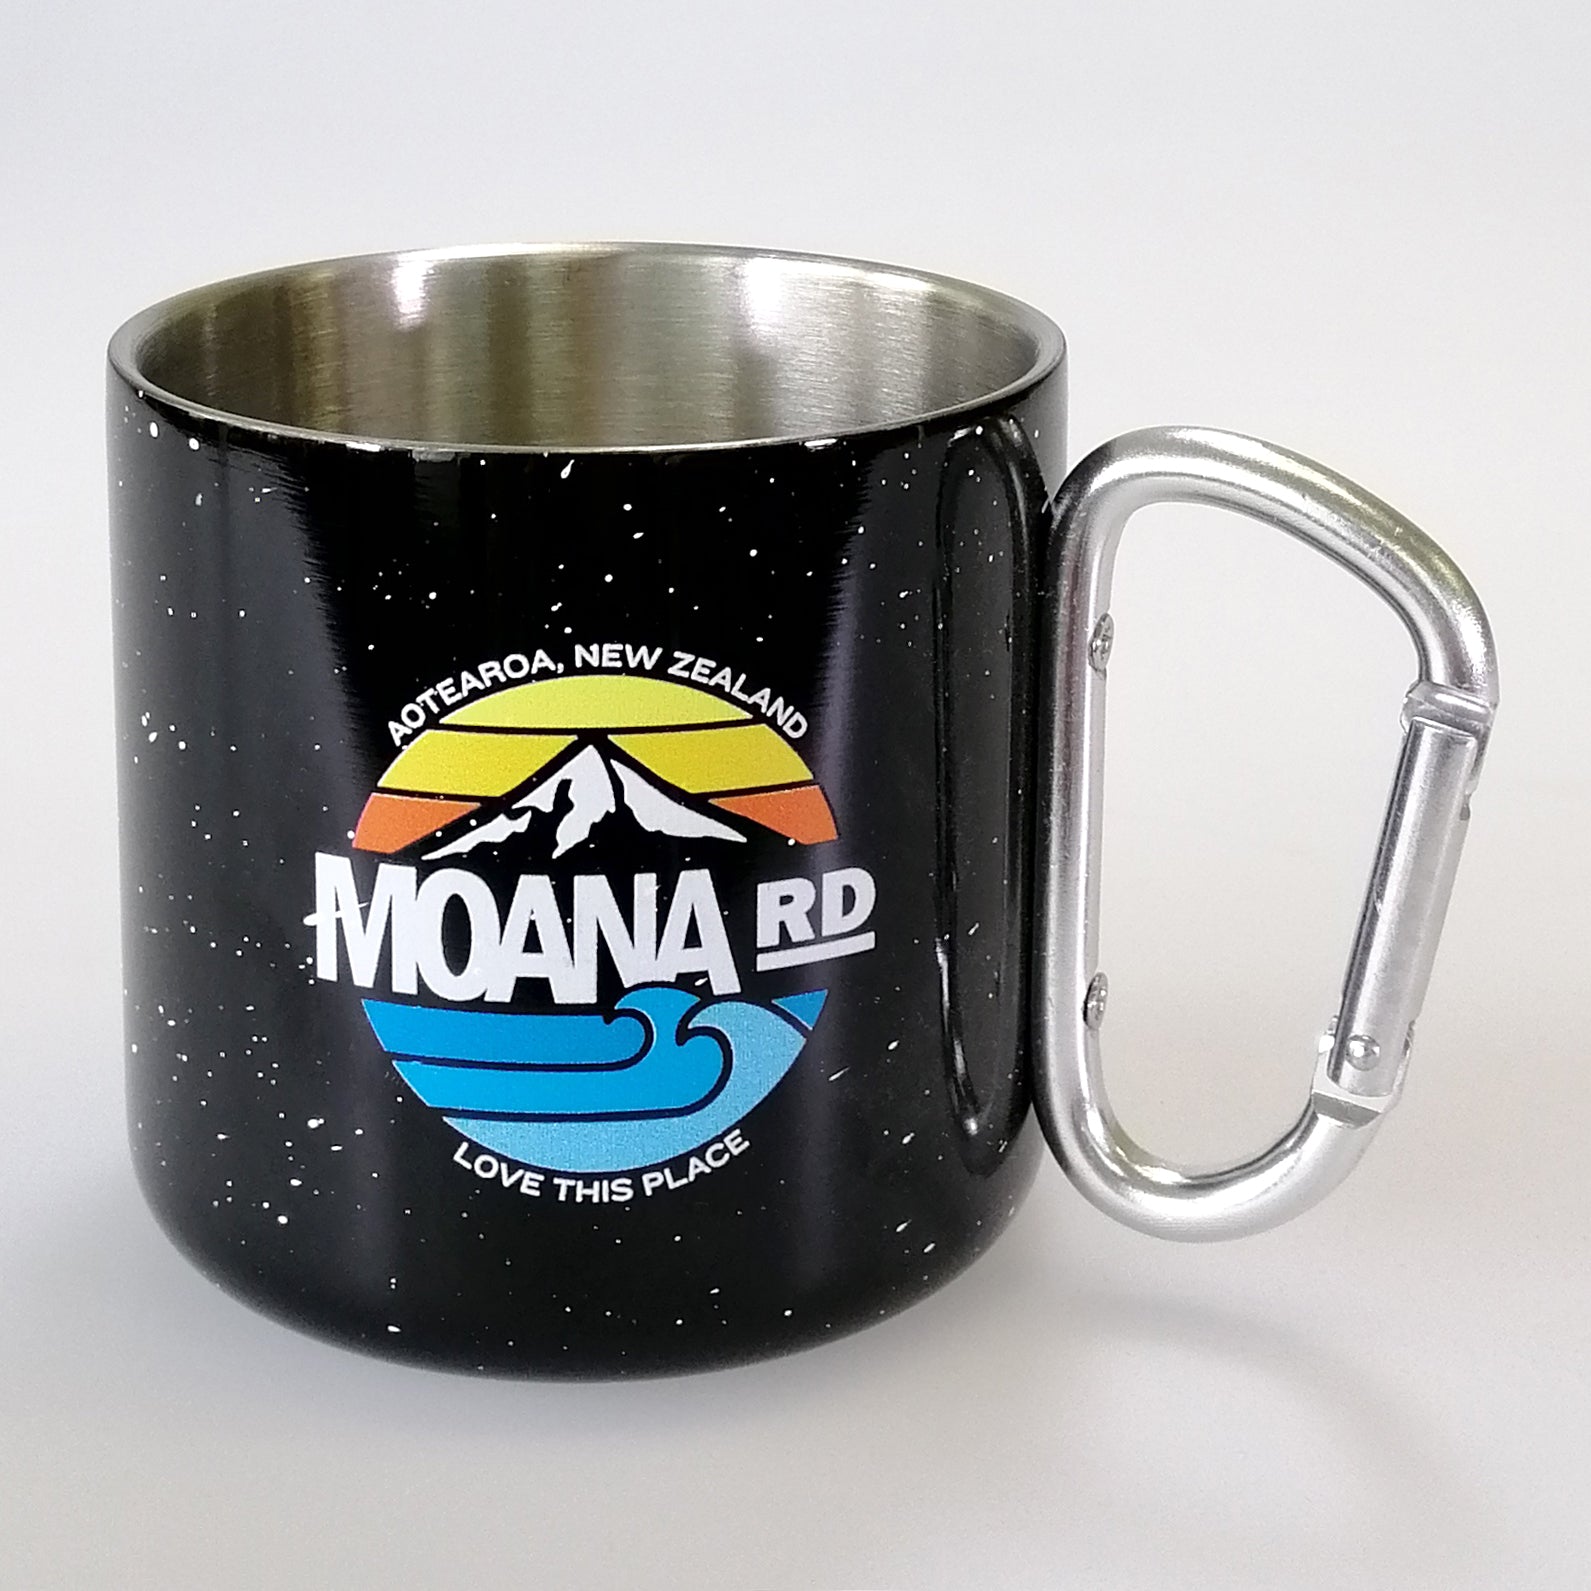 Moana Road - Carabiner Mug